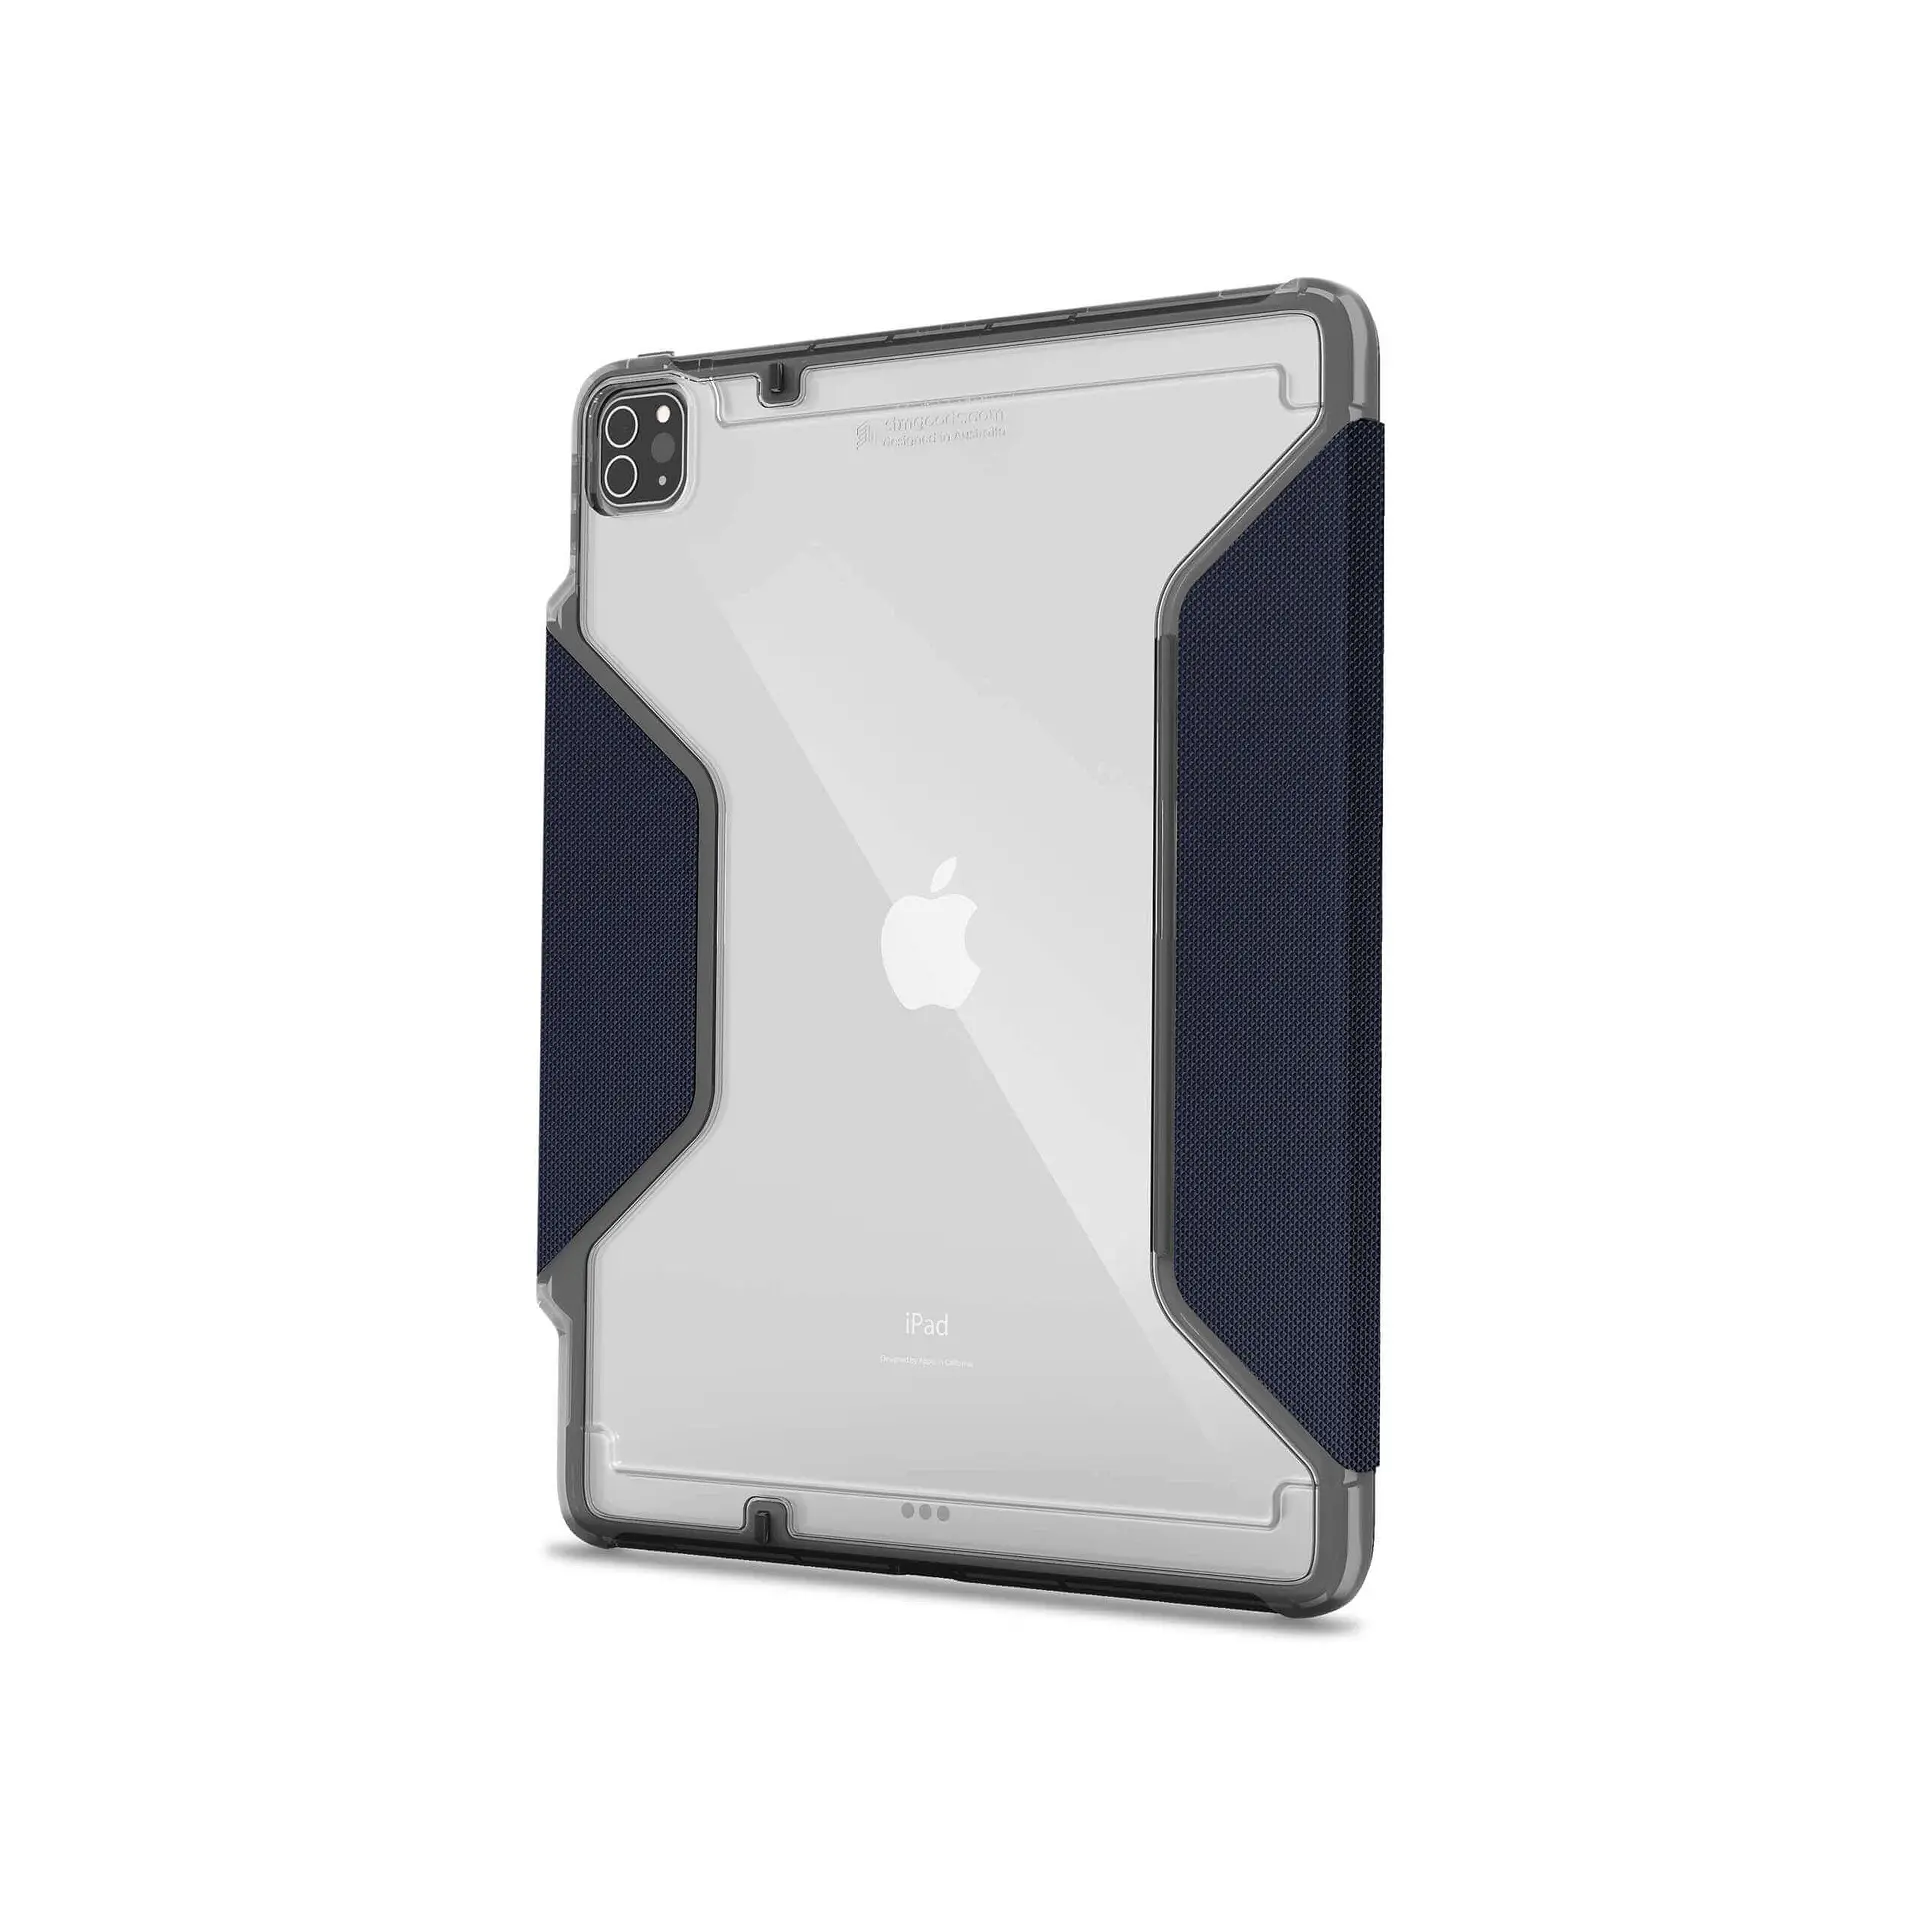 Калъф STM Case Dux Plus iPad Pro 11 AP, Син - image 1